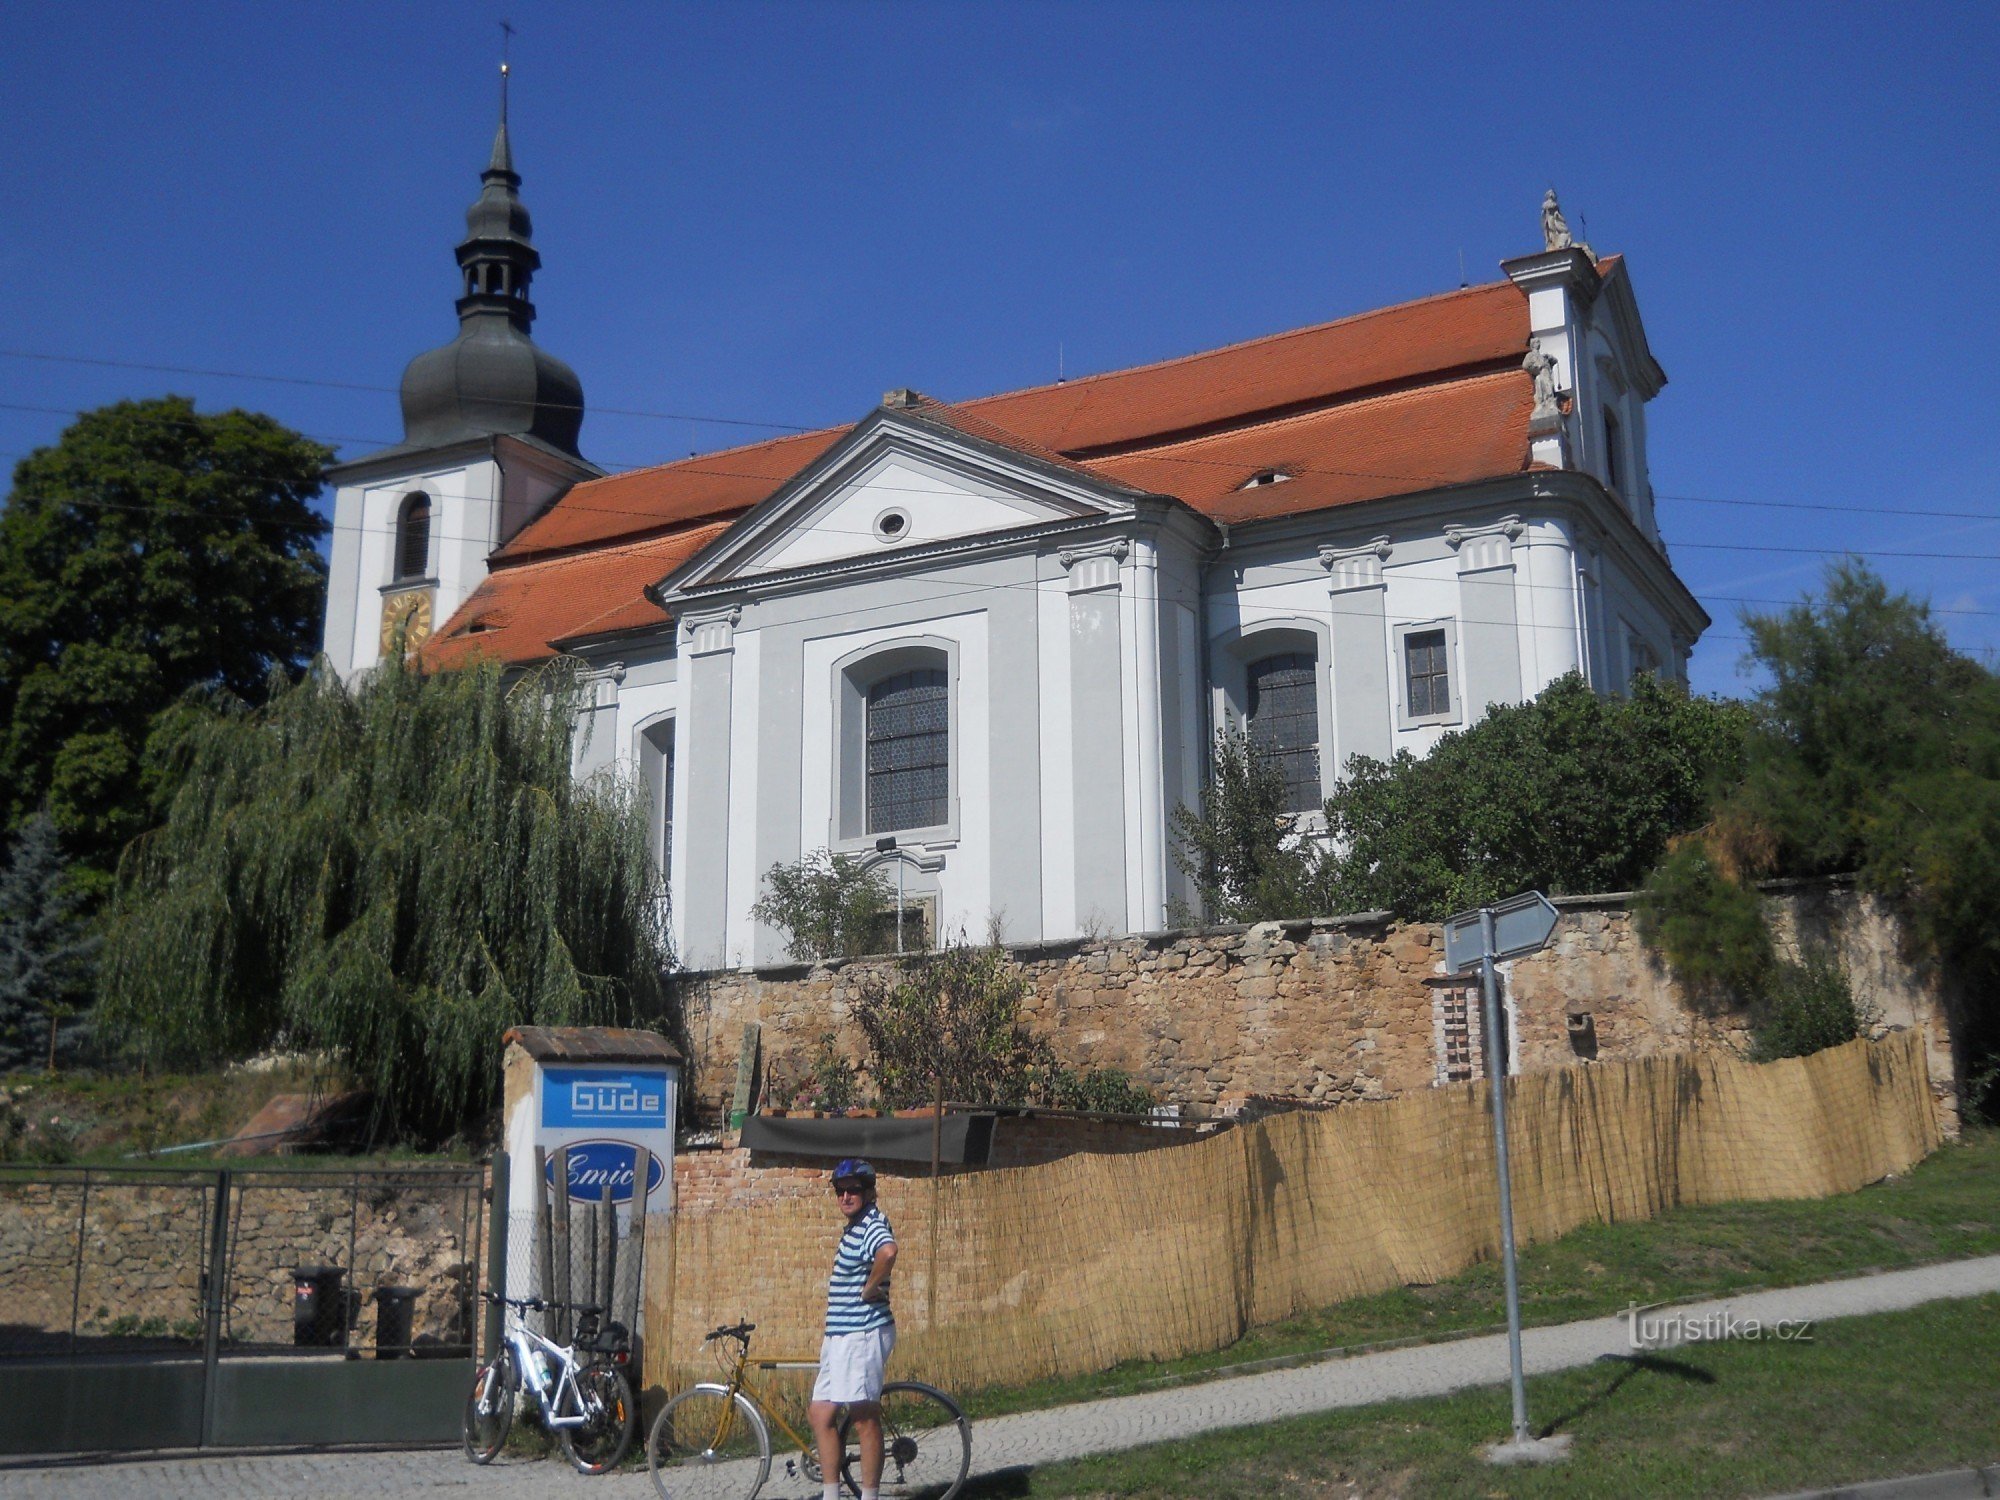 Vejprnice - baroque church of St. Vojtěch from 1722 - 1726